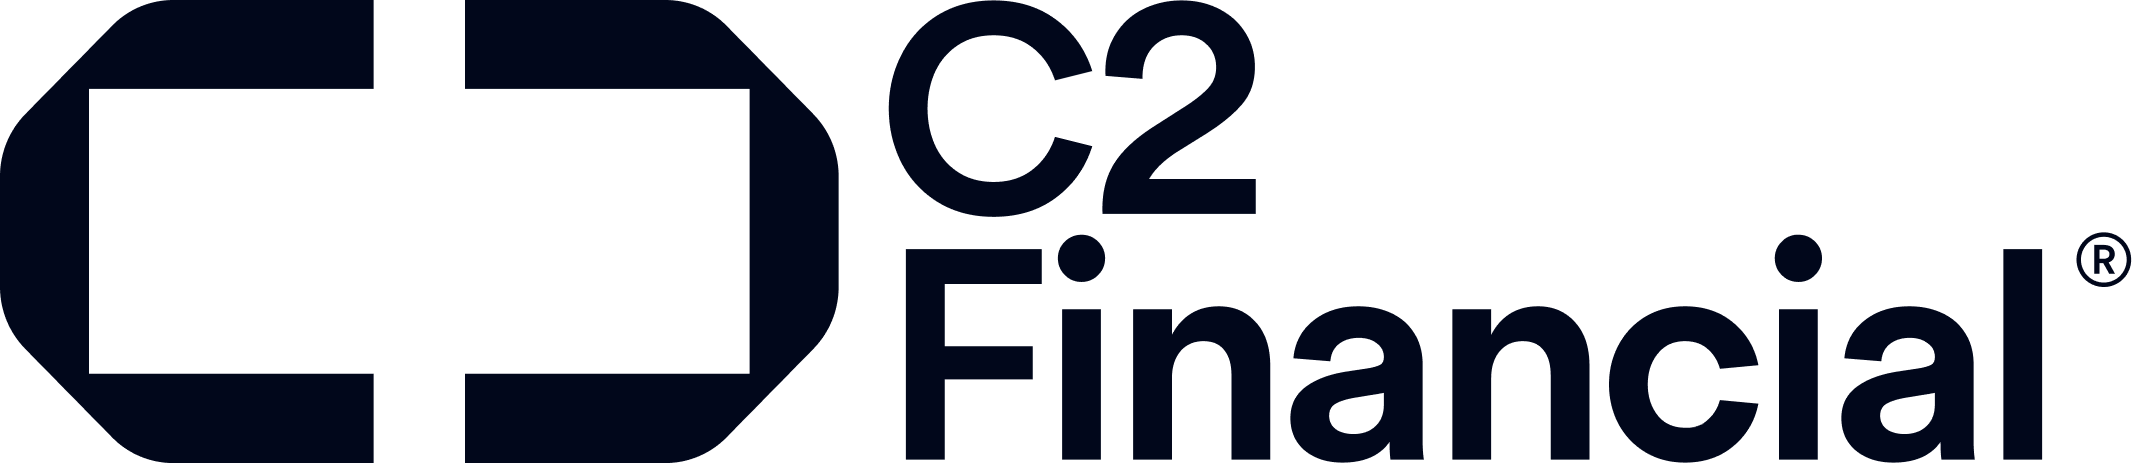 C2 Financial Corp Advice